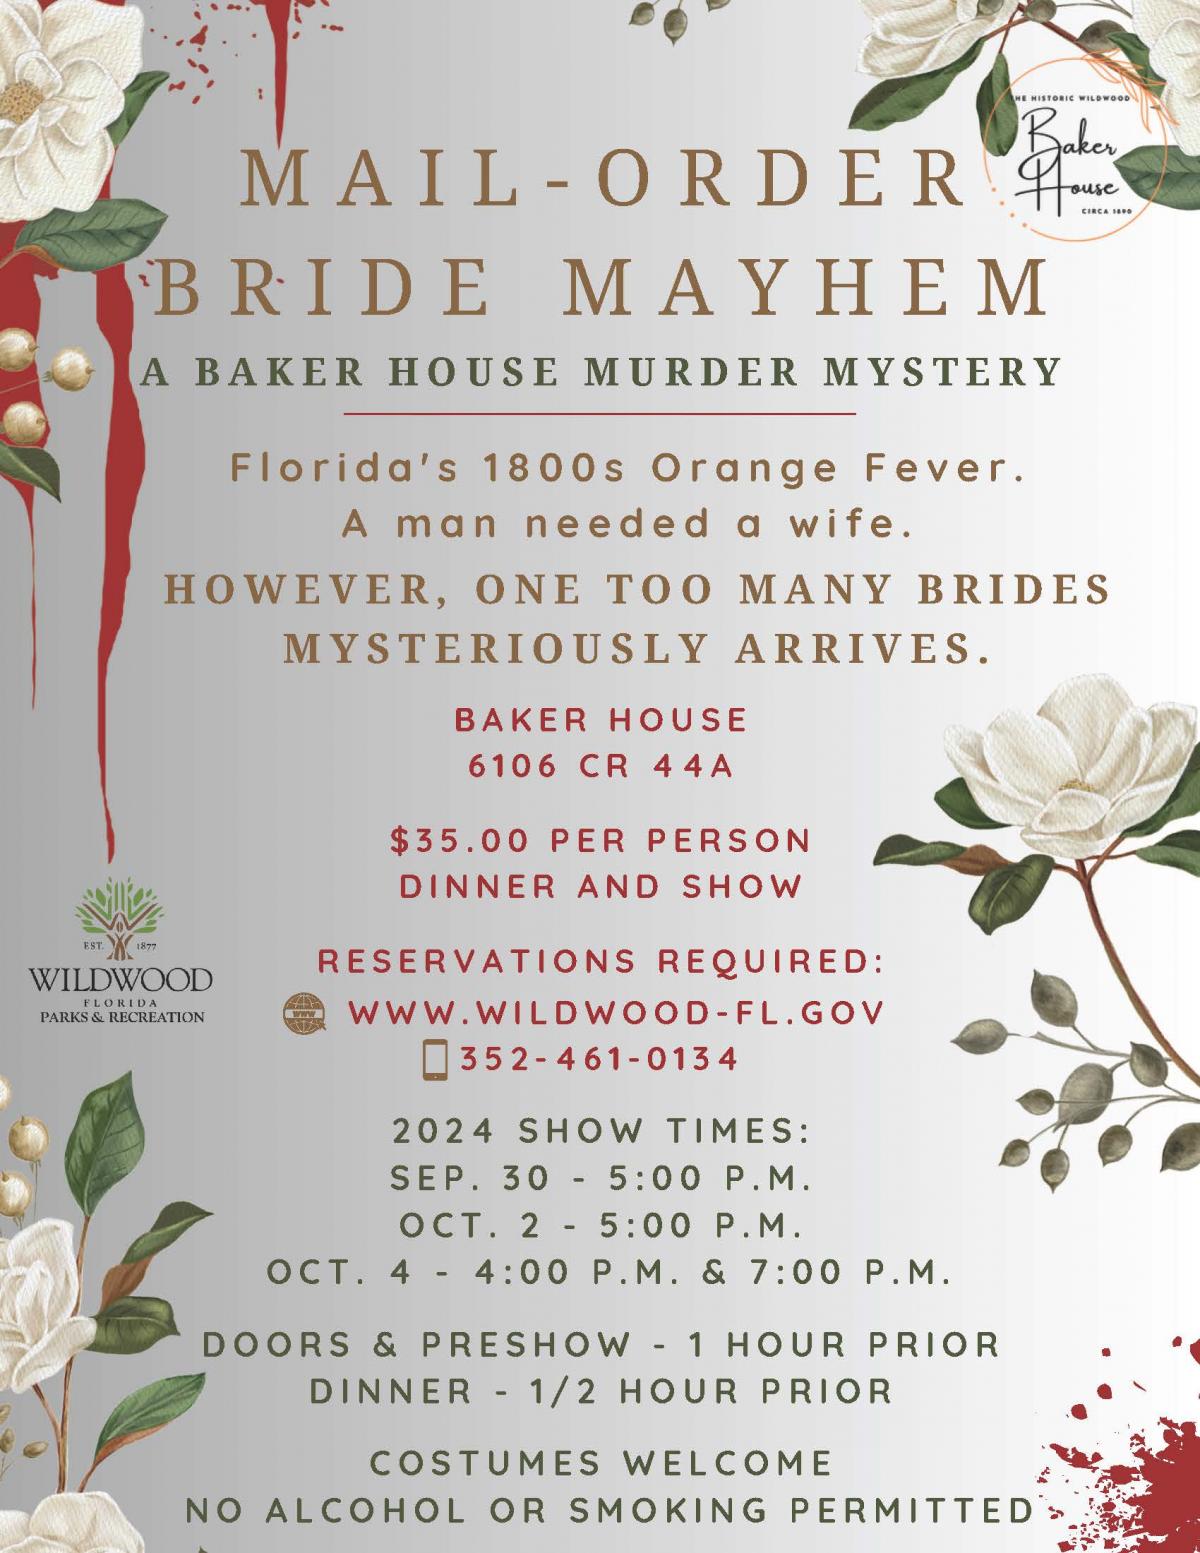 Murder Mystery Mail Order Bride Mayhem, September 30, October 2, 4, 2024, Baker House, 6106 CR 44A, Wildwood Fl, 34785